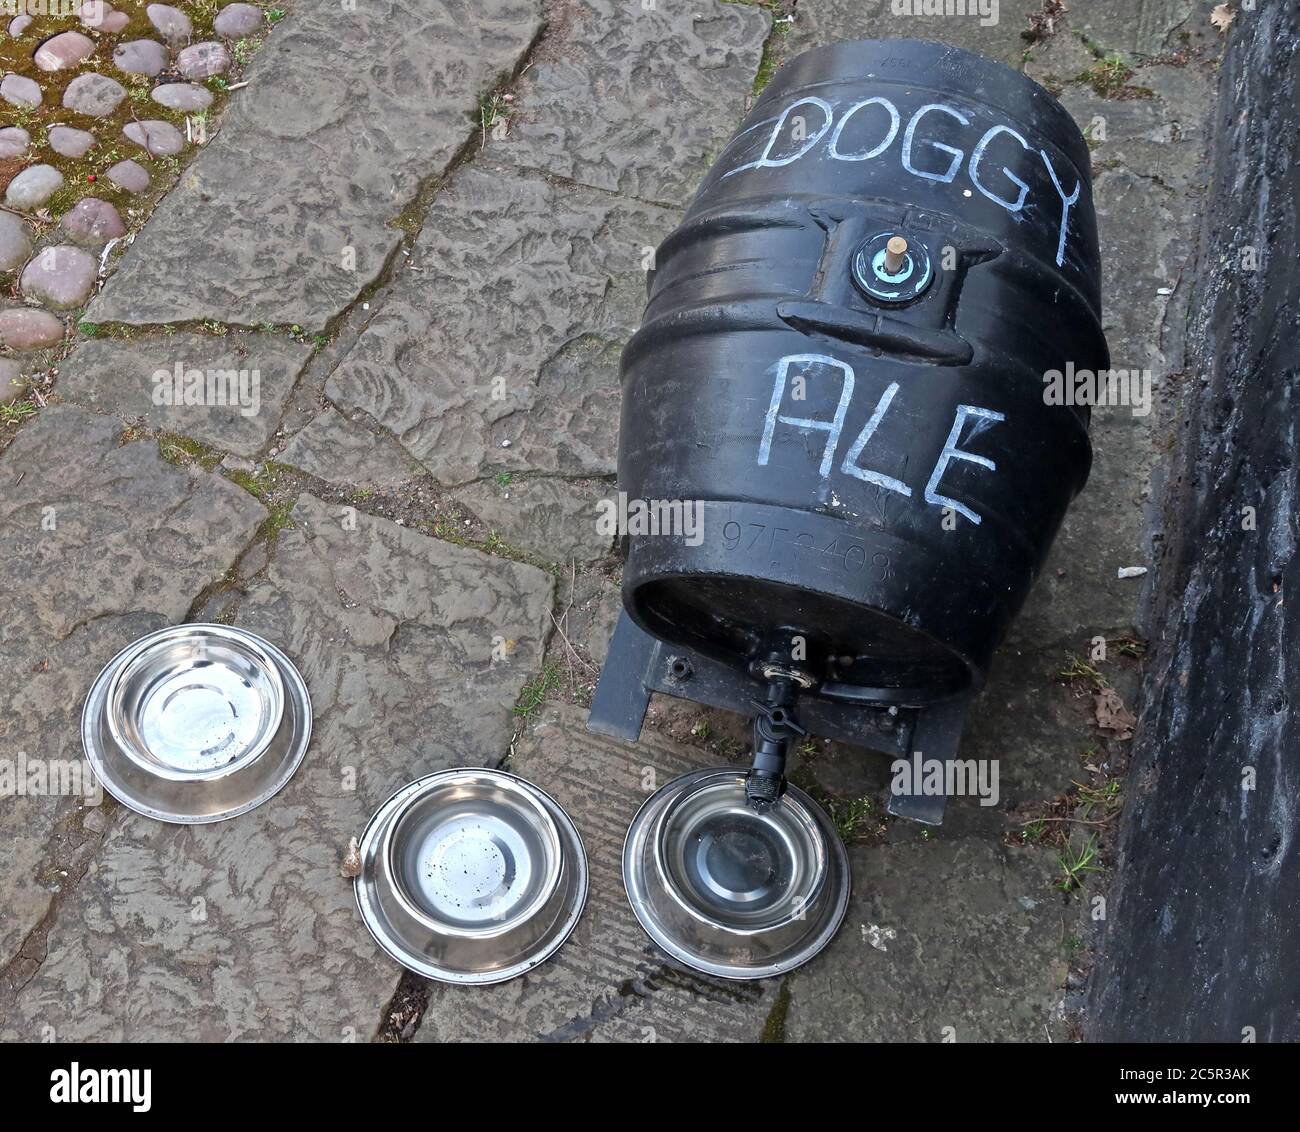 Doggy Ale, ale para perros, Pickering Arms, Thelwall, Warrington, Cheshire, Inglaterra, Reino Unido Foto de stock